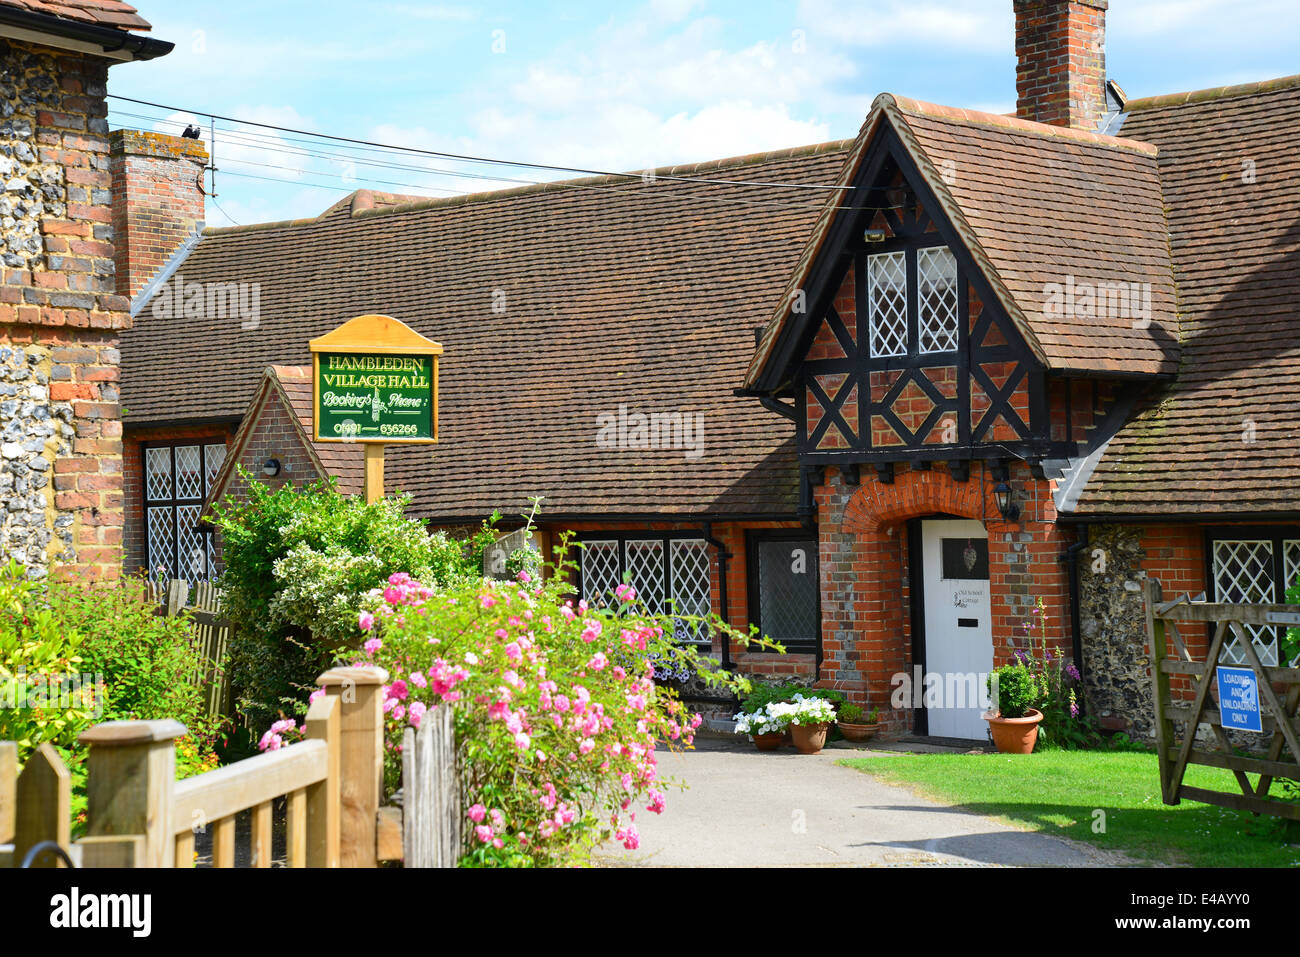 Hambledon Village Hall, Hambleden, Buckinghamshire, England, United Kingdom Stock Photo